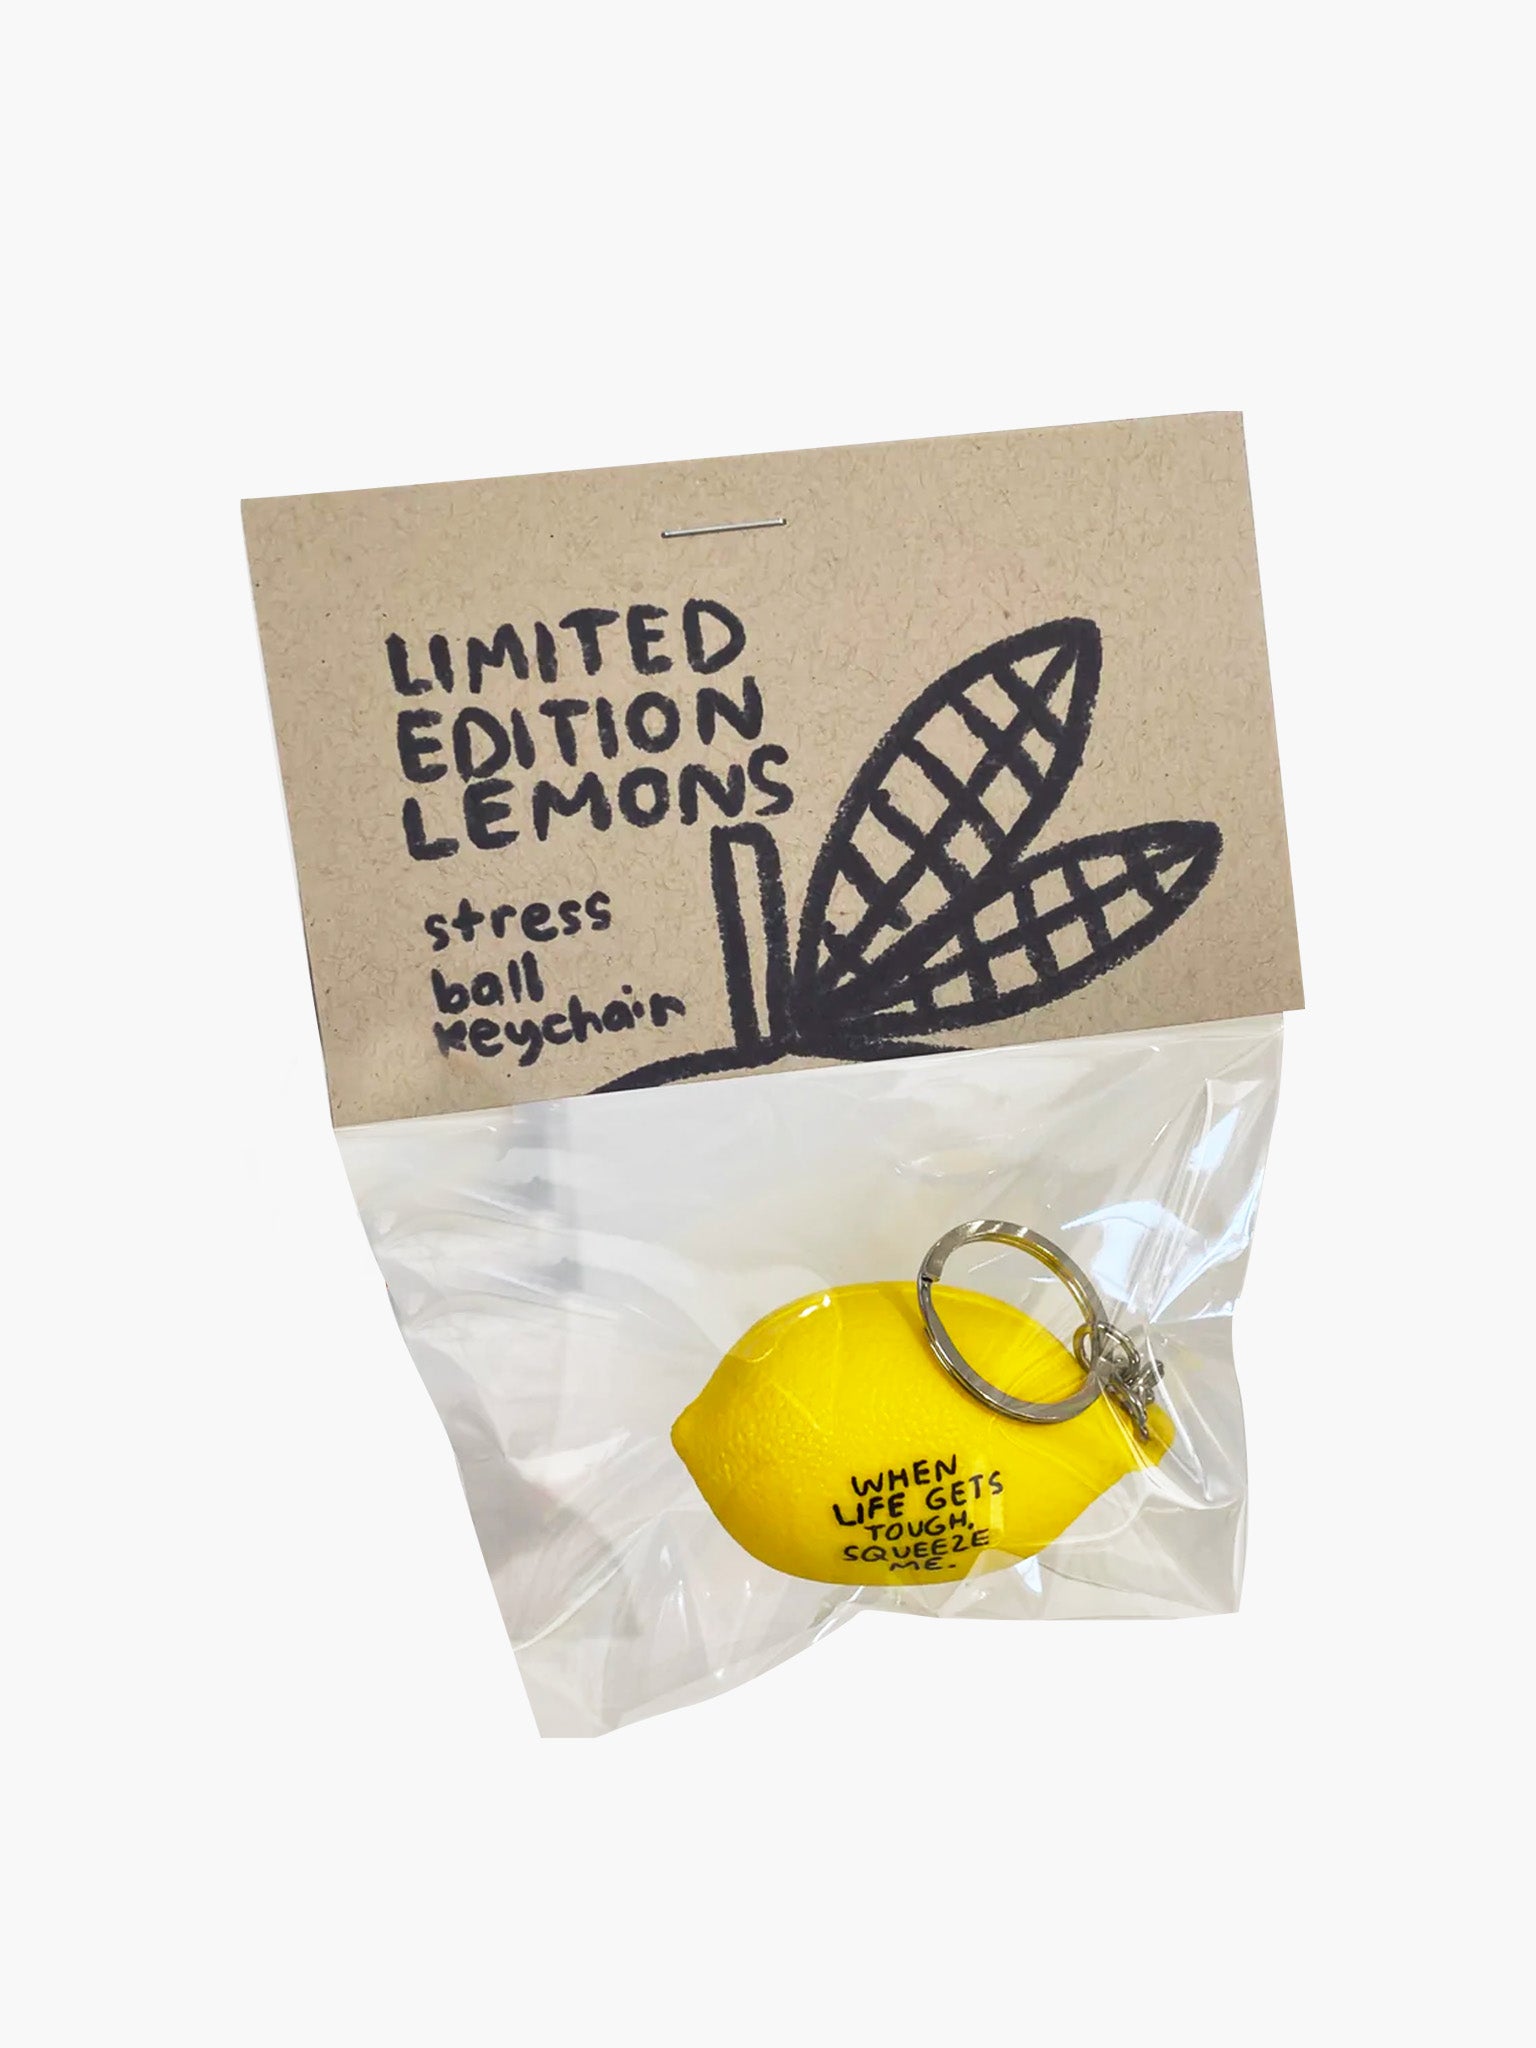 Lemon Stress Ball (Limited Edition)